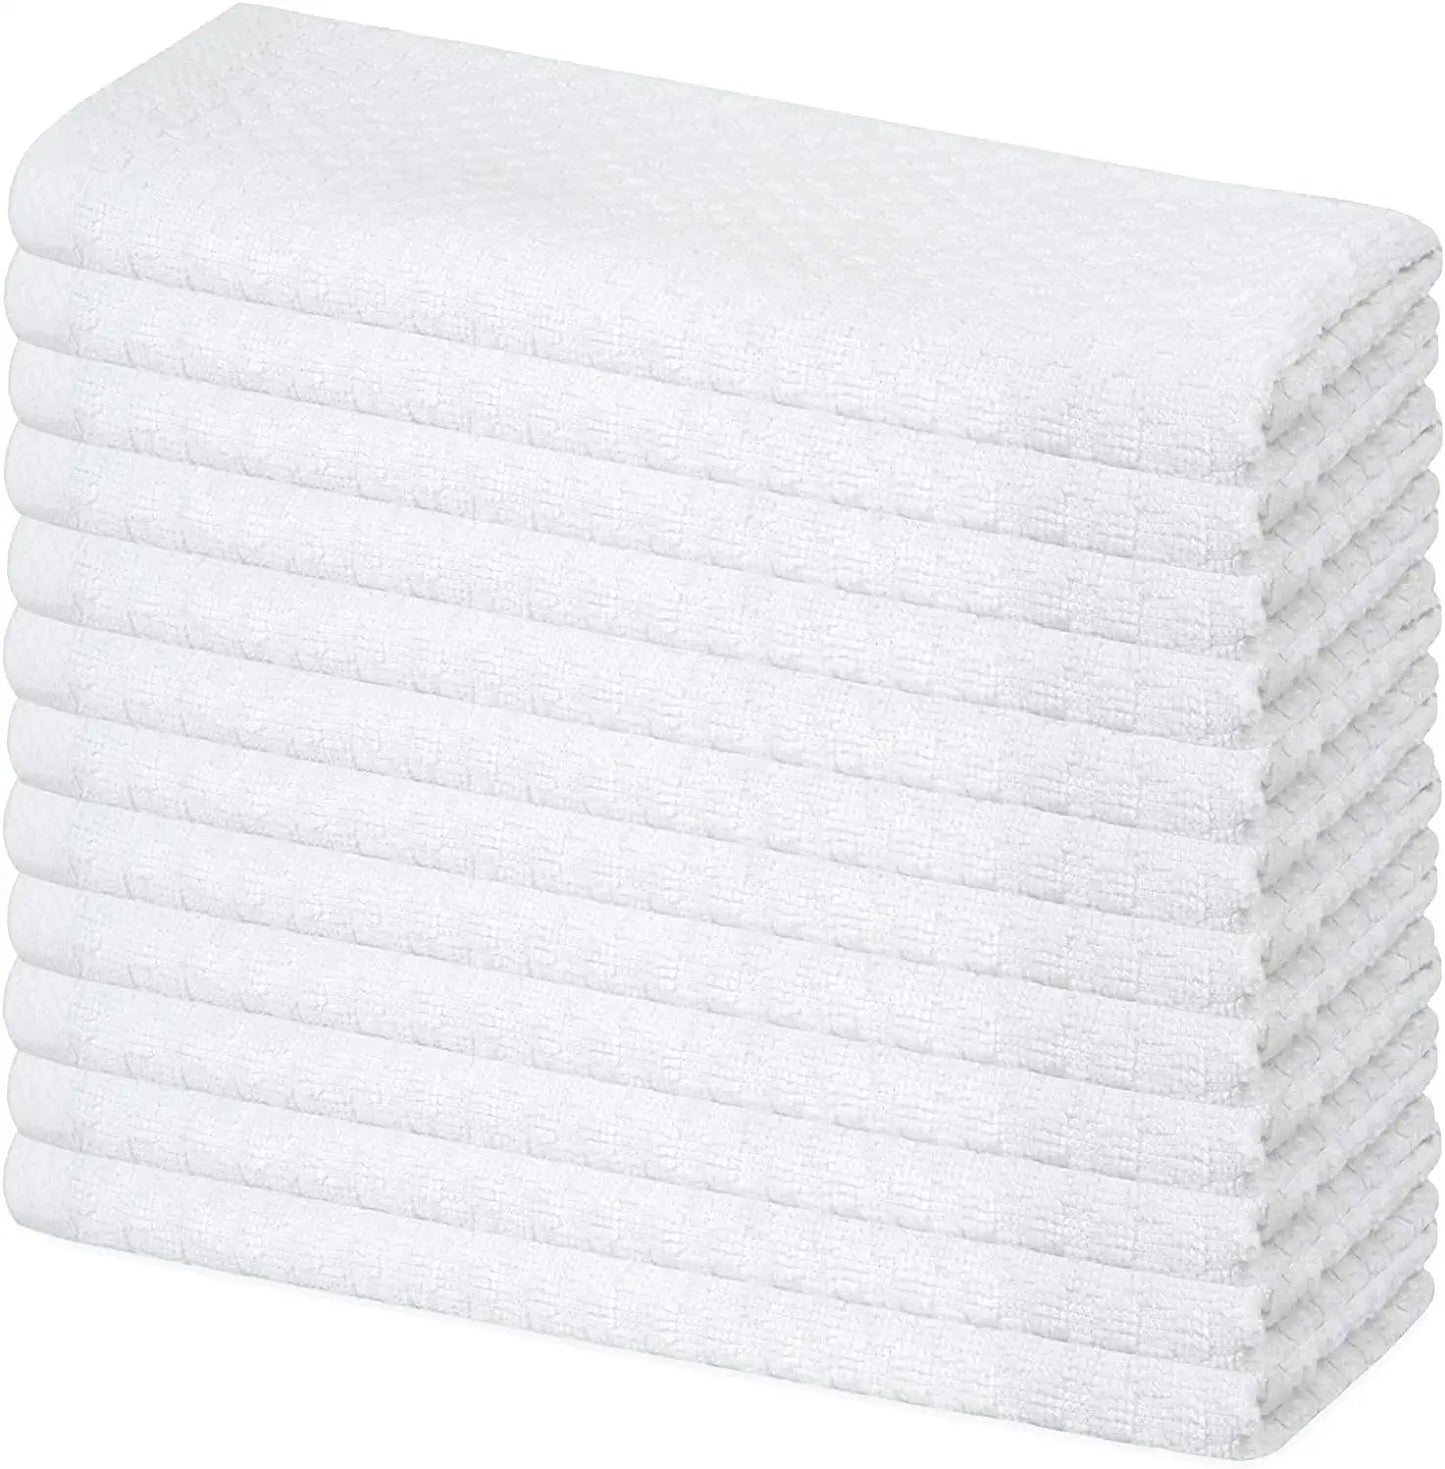 White Dish towels